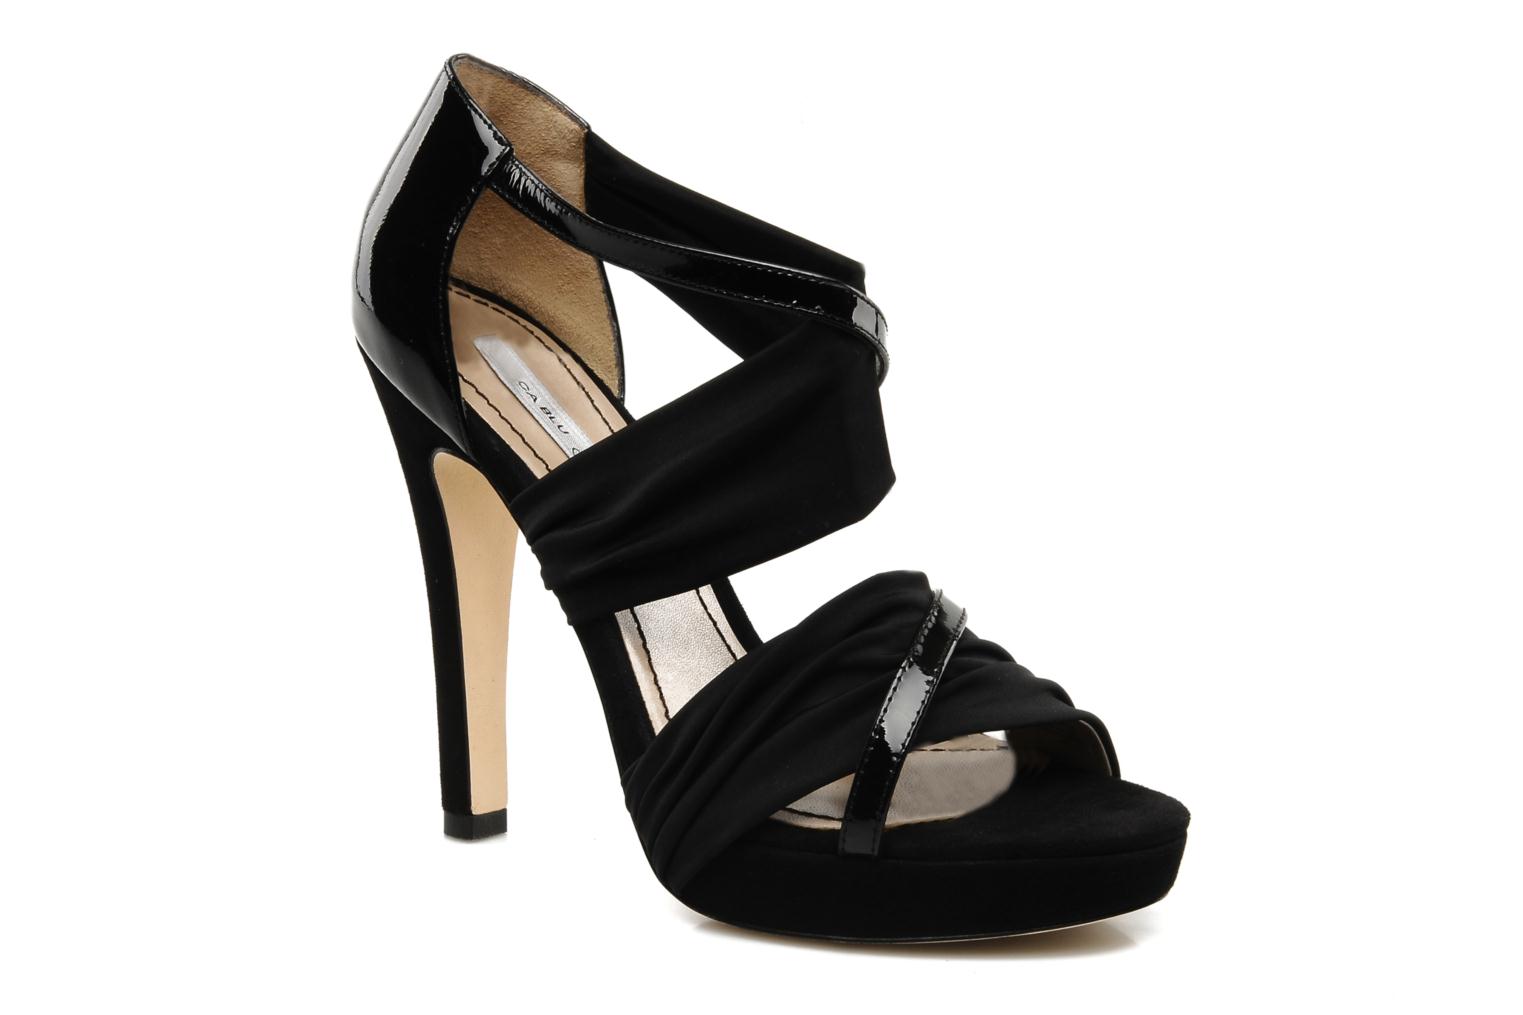 Tosca Blu Shoes Lilium 3 Sandals in Black at Sarenza.co.uk (89843)